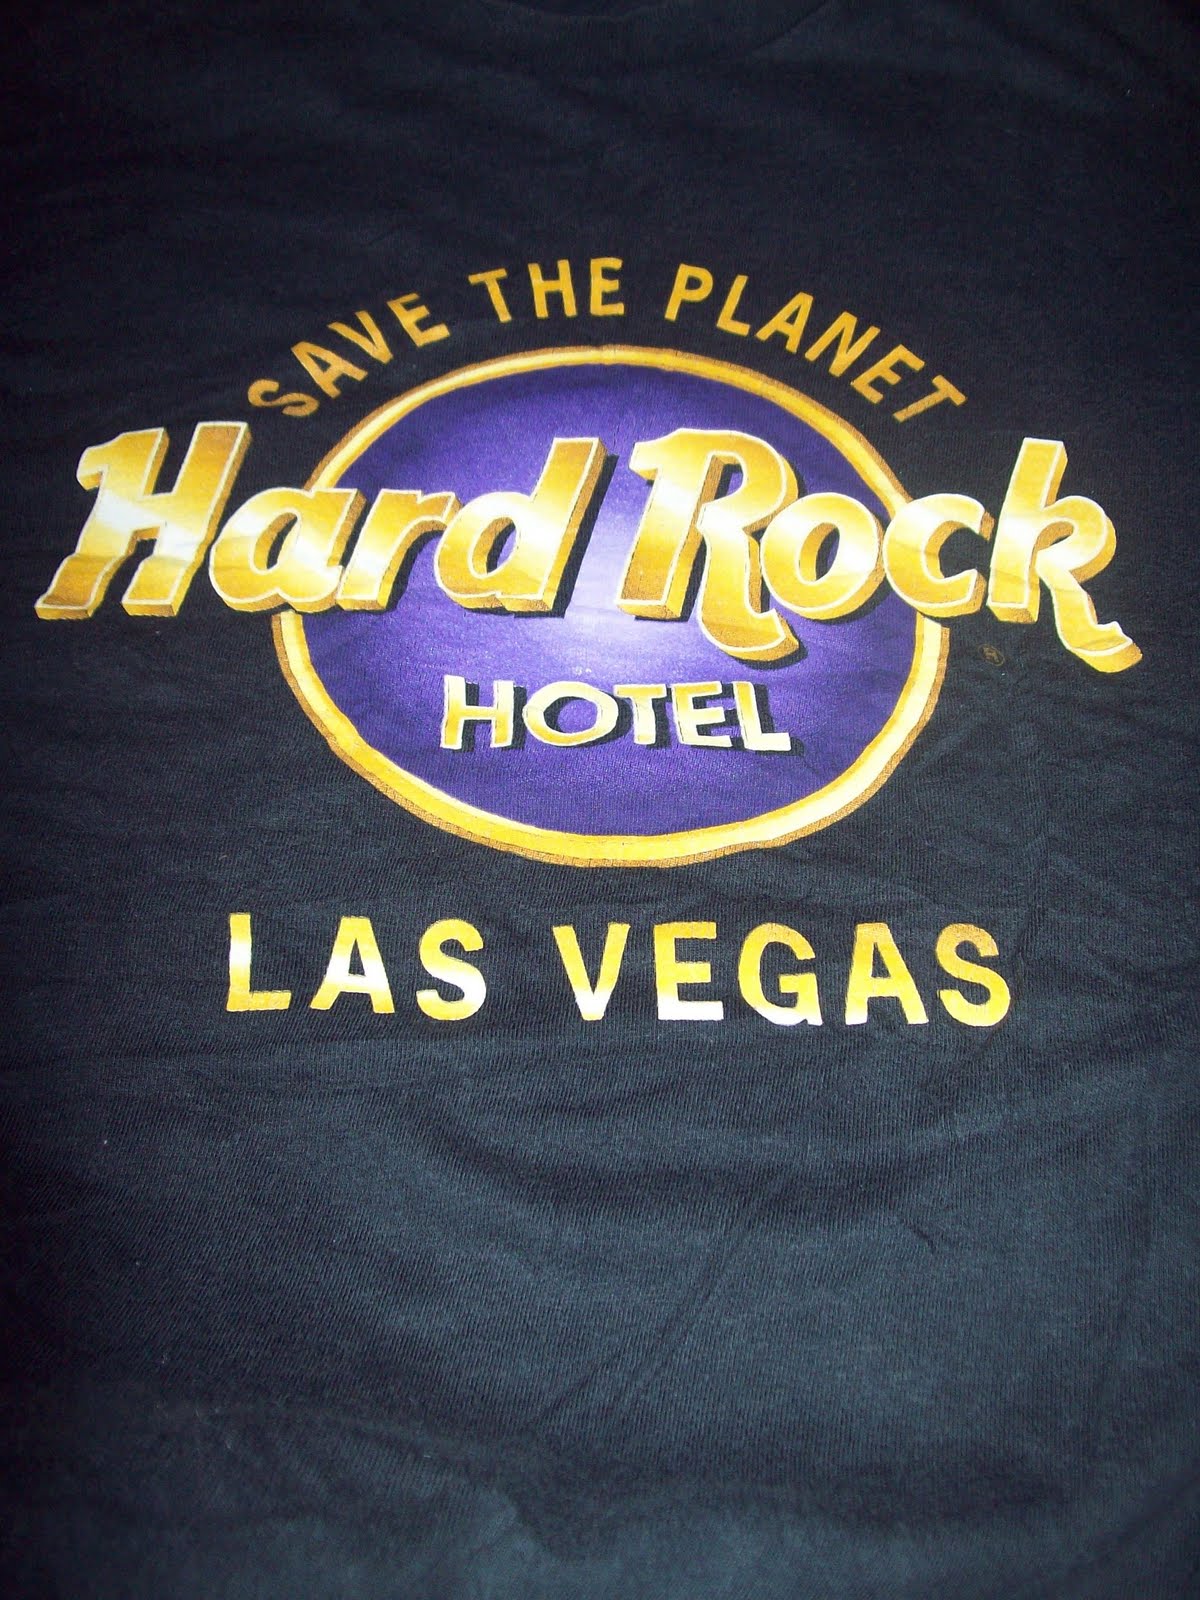 NEW OLD STUFF: HARD ROCK HOTEL LAS VEGAS T-SHIRT